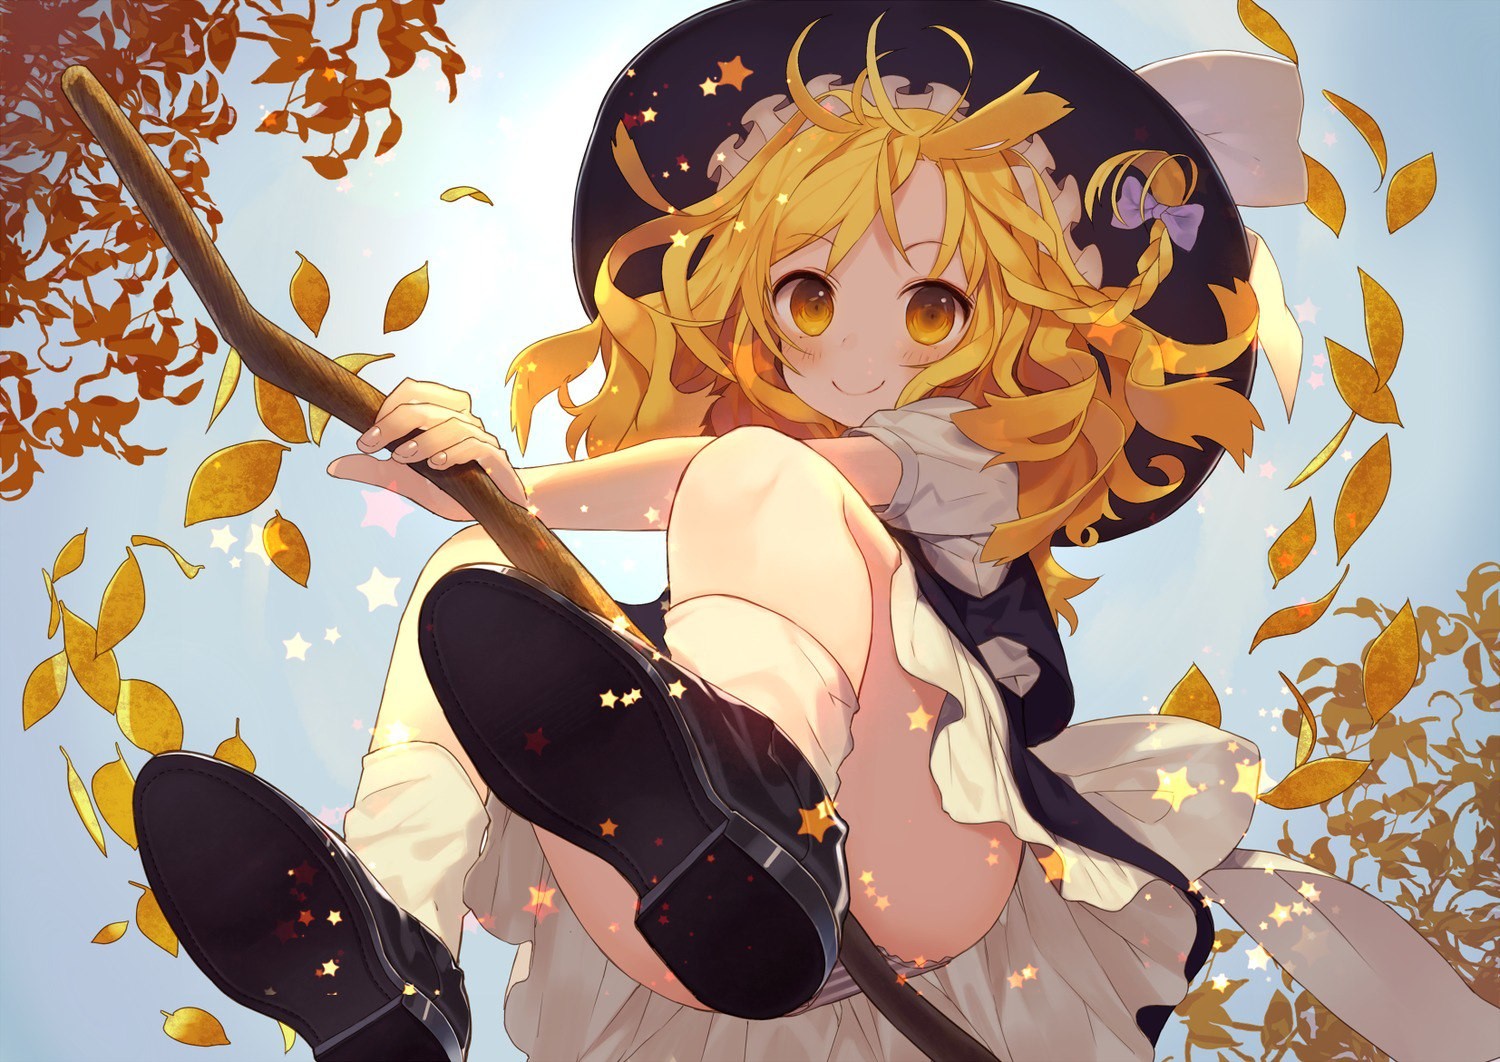 Anime 1500x1062 anime Touhou broom witch Kirisame Marisa feet shoes smiling fantasy art fantasy girl blonde loli